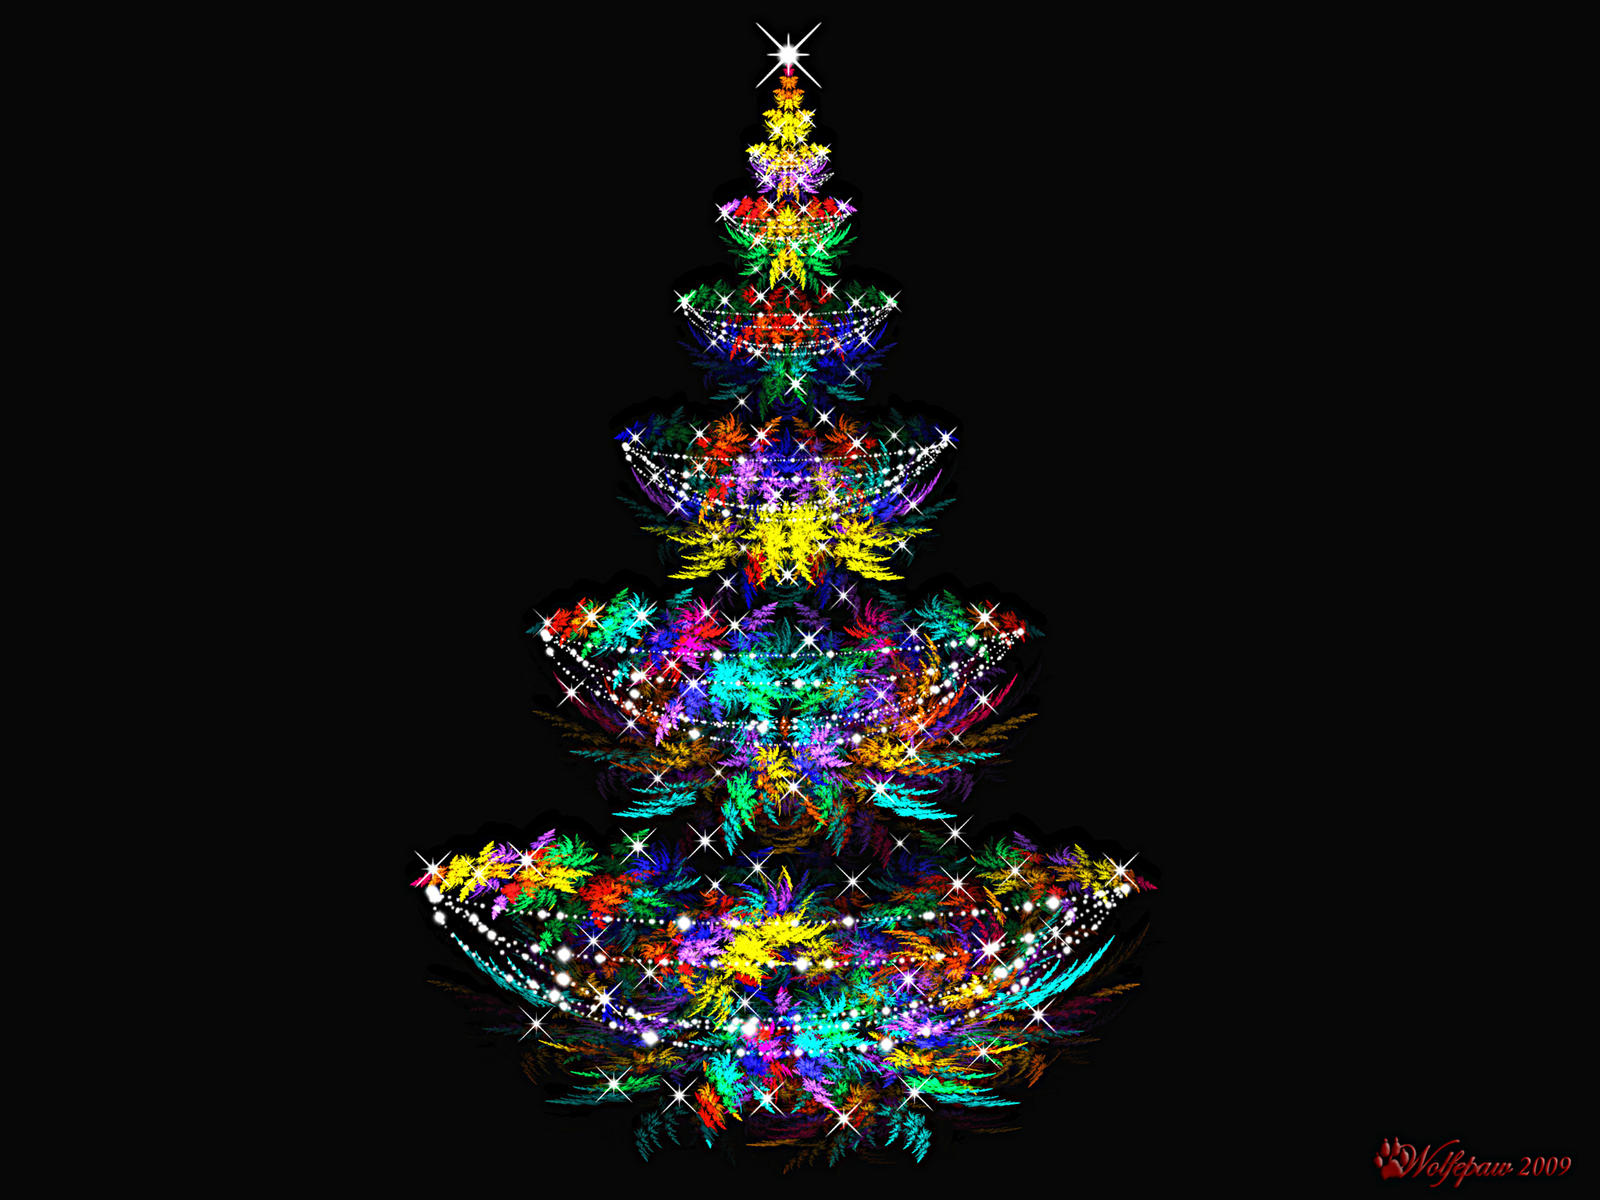 Merry Apo Christmas by wolfepaw on DeviantArt